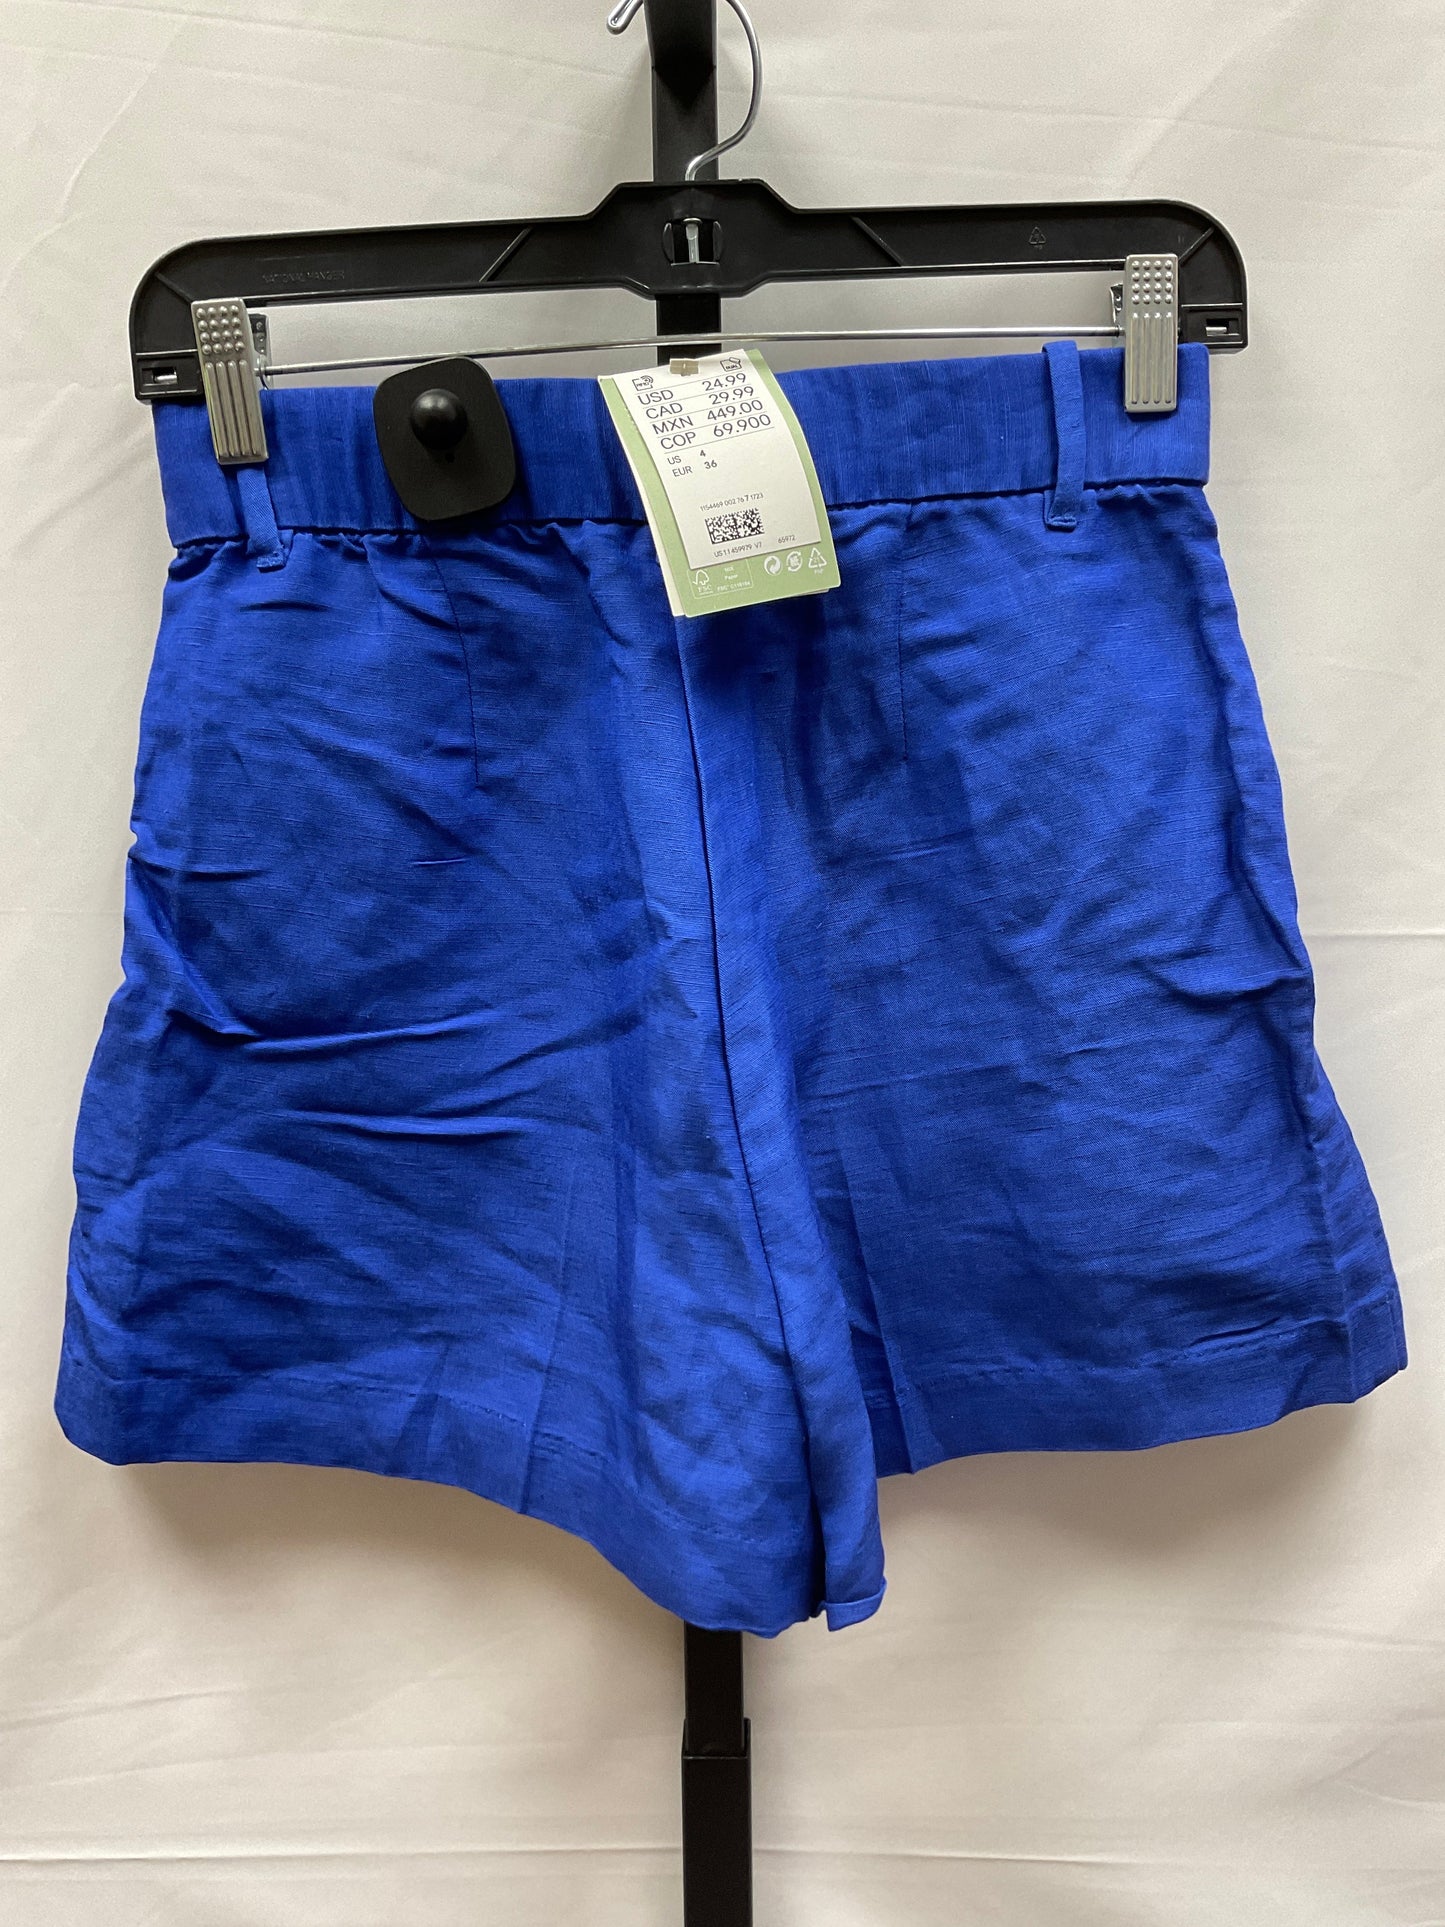 Blue Shorts H&m, Size 4